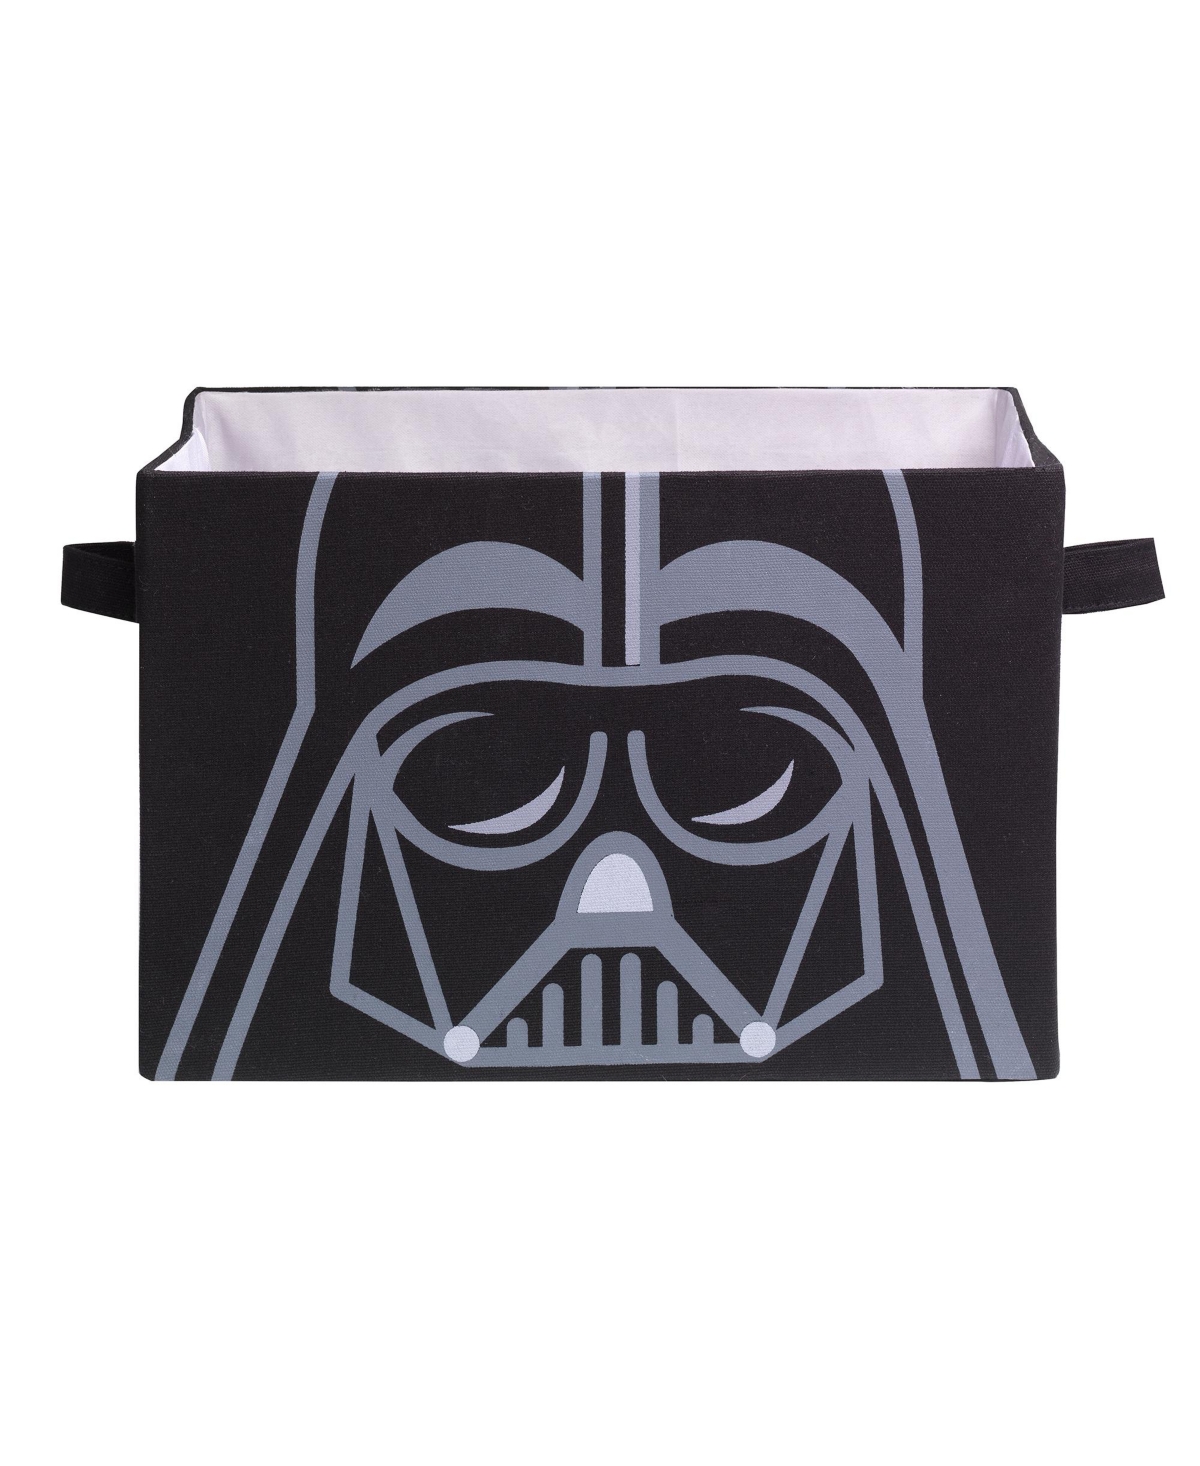 Star Wars Darth Vader Foldable/Collapsible Storage Bin Organizer - Black